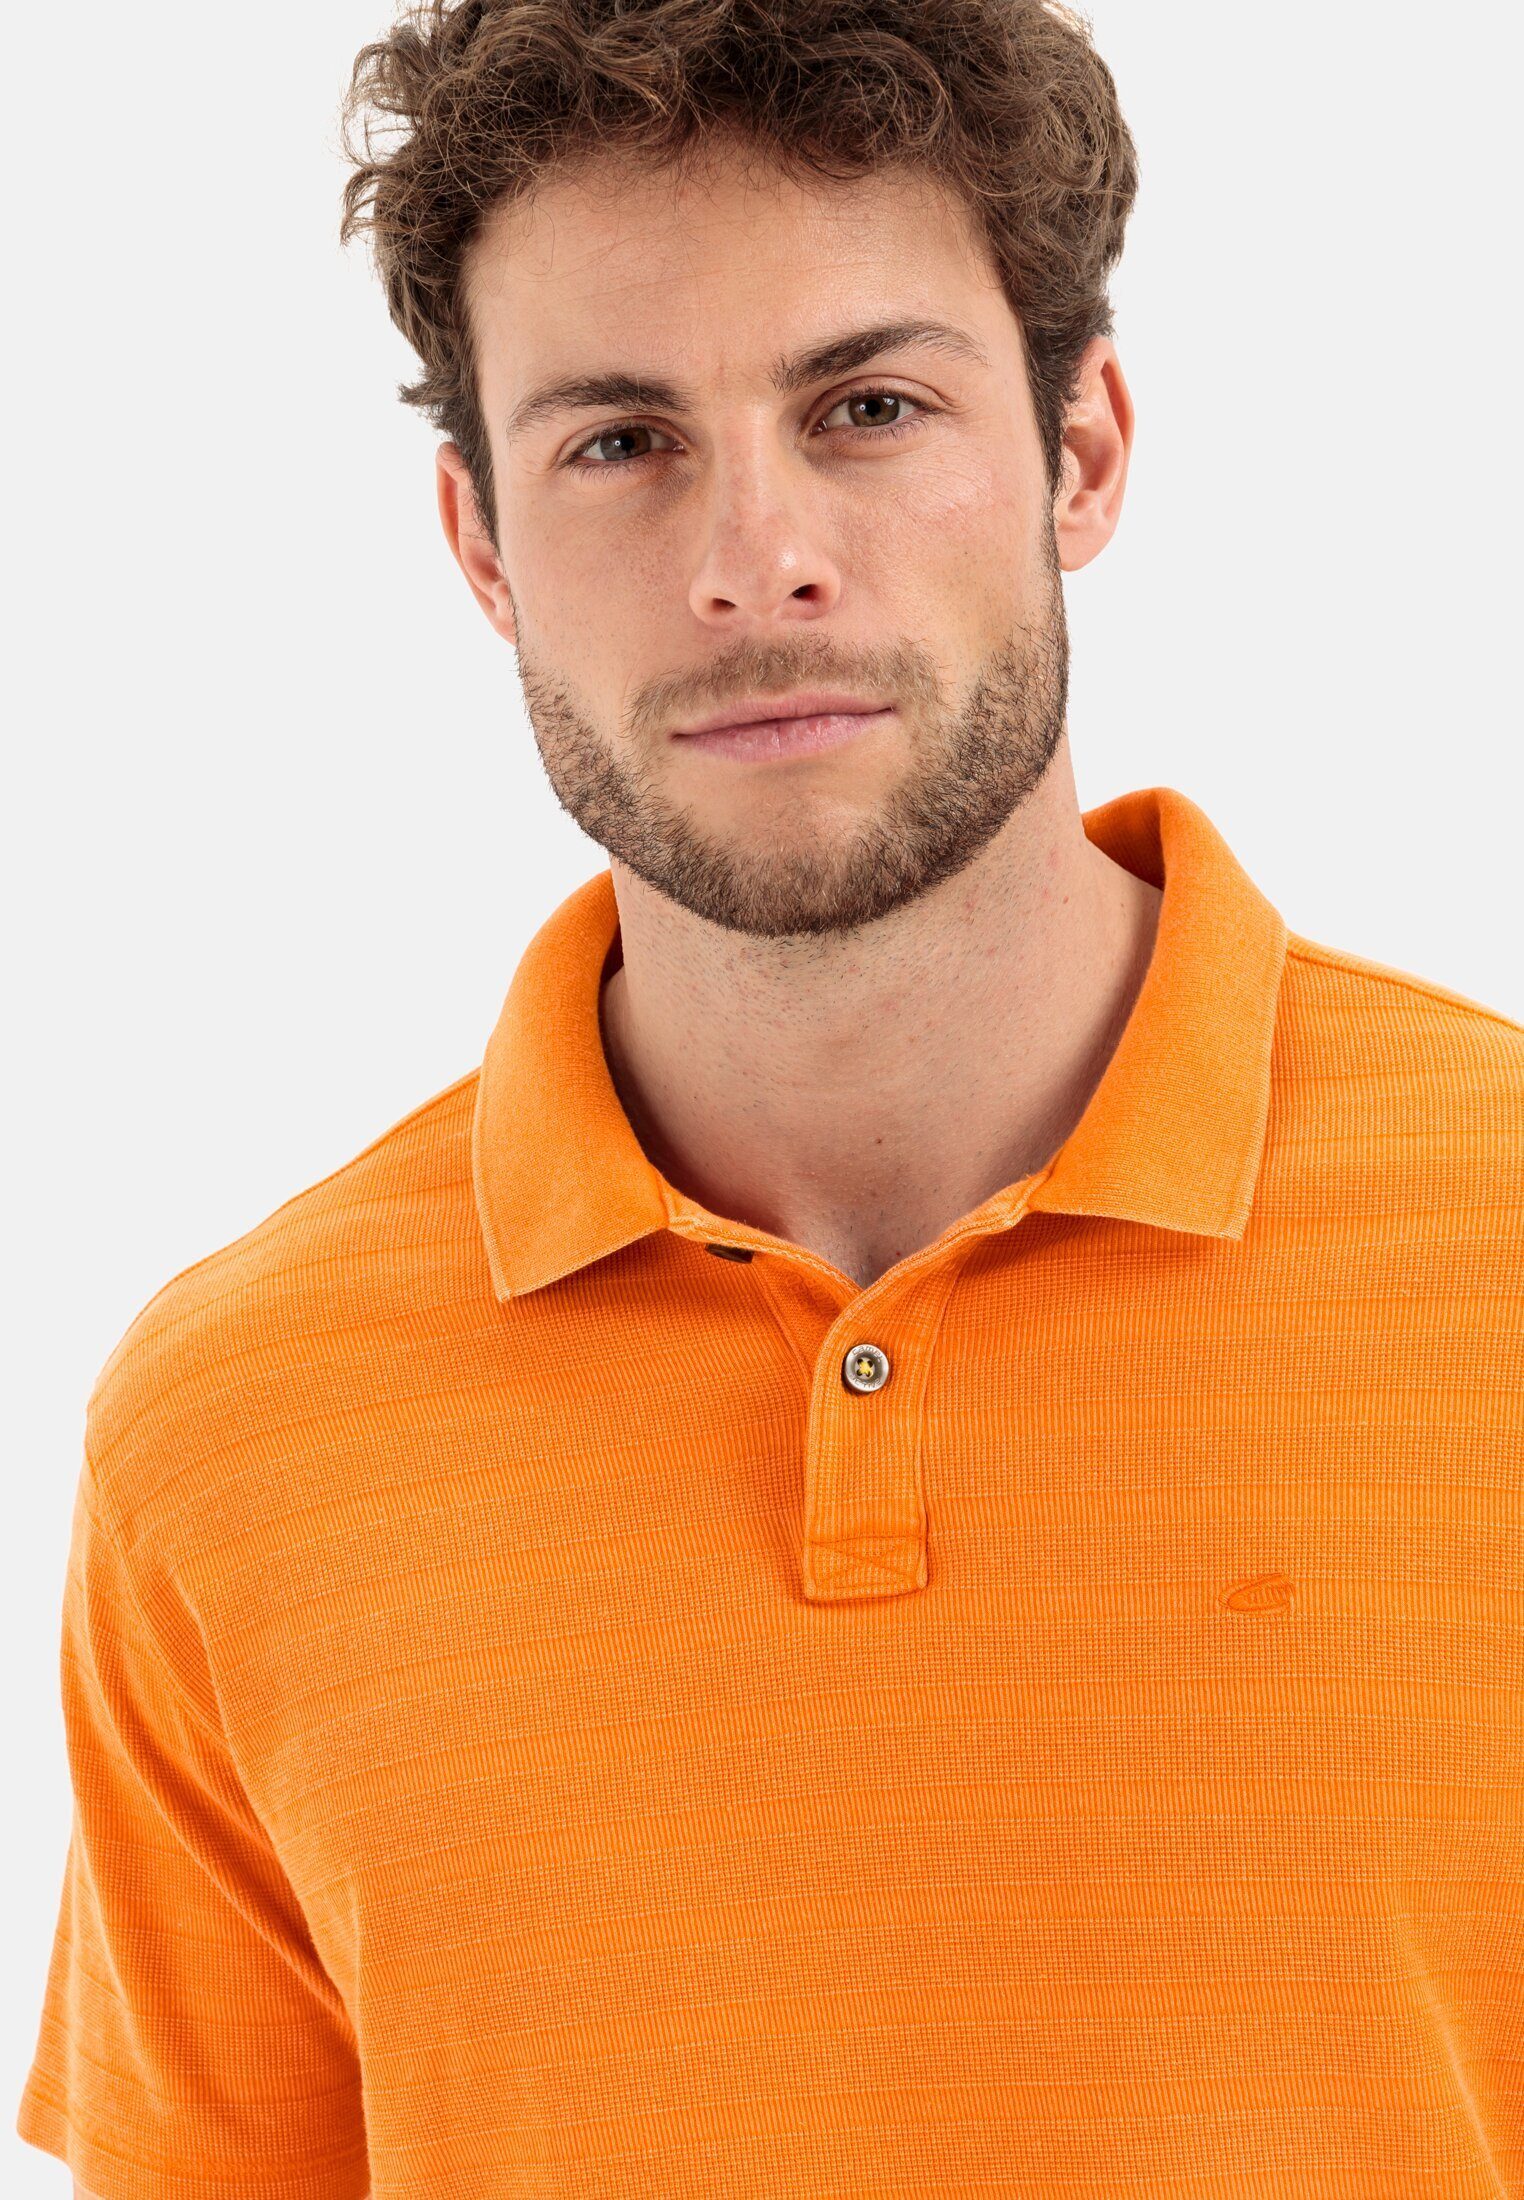 active im camel tonalen Shirts_Poloshirt Orange Poloshirt Streifenmuster